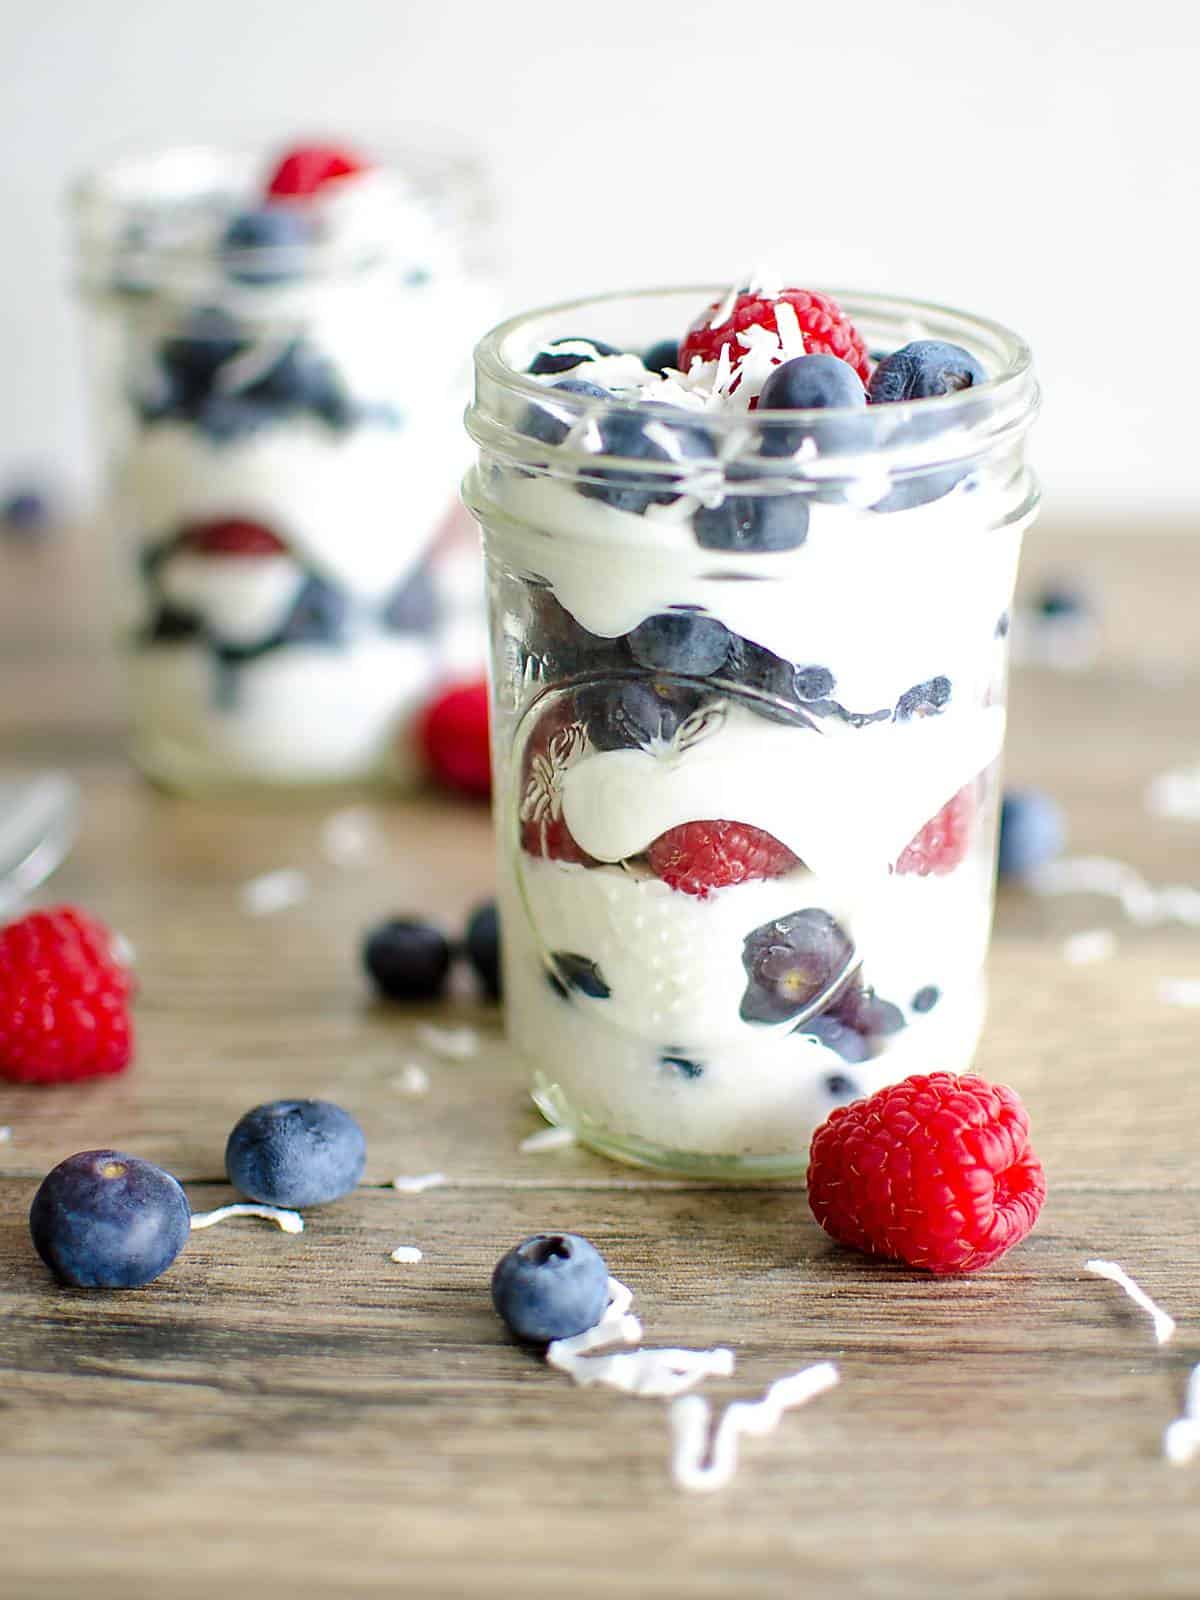 coconut yogurt layered with raspberries and blueberries in a mason jar.